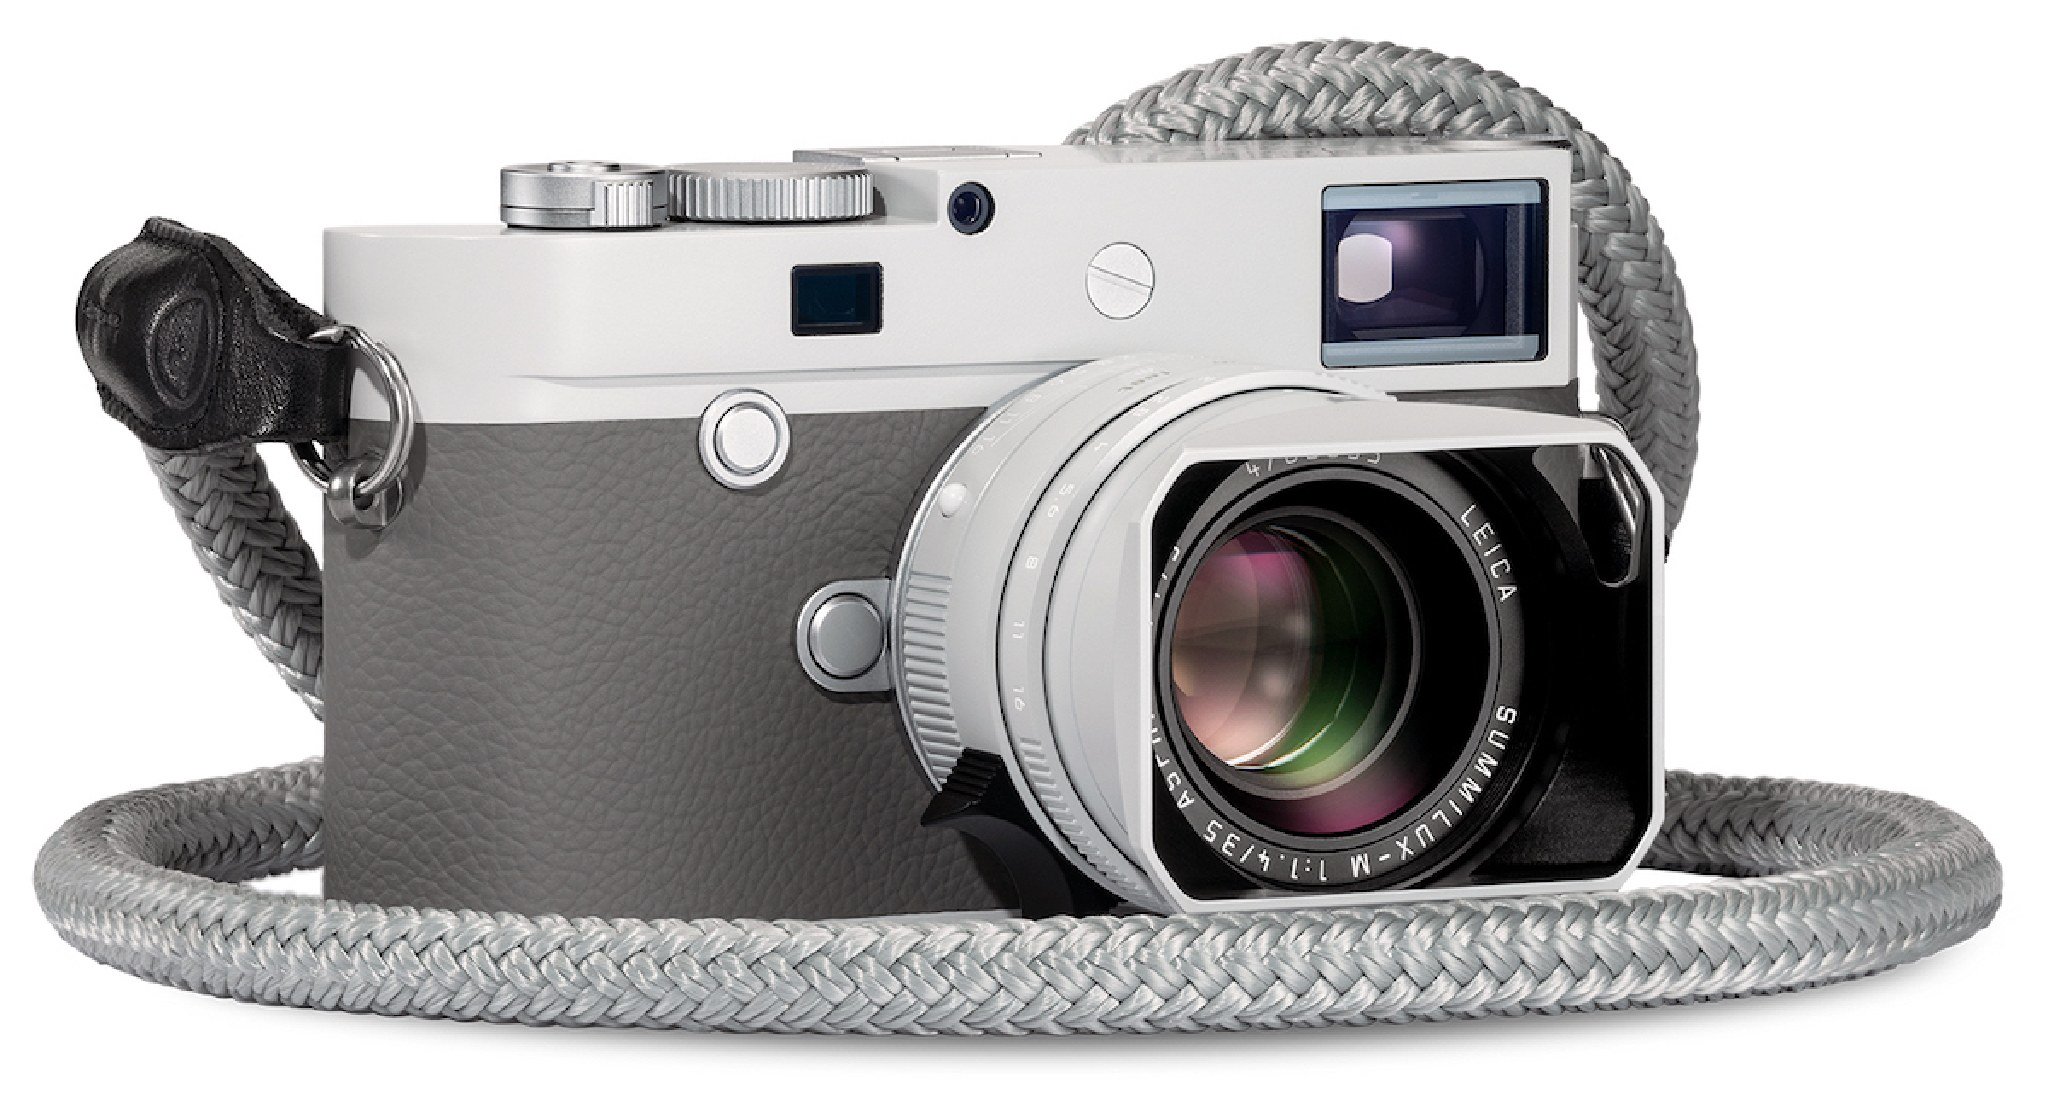 Đang tải Leica-M10-P-Ghost-limited-edition-camera-1.jpg…